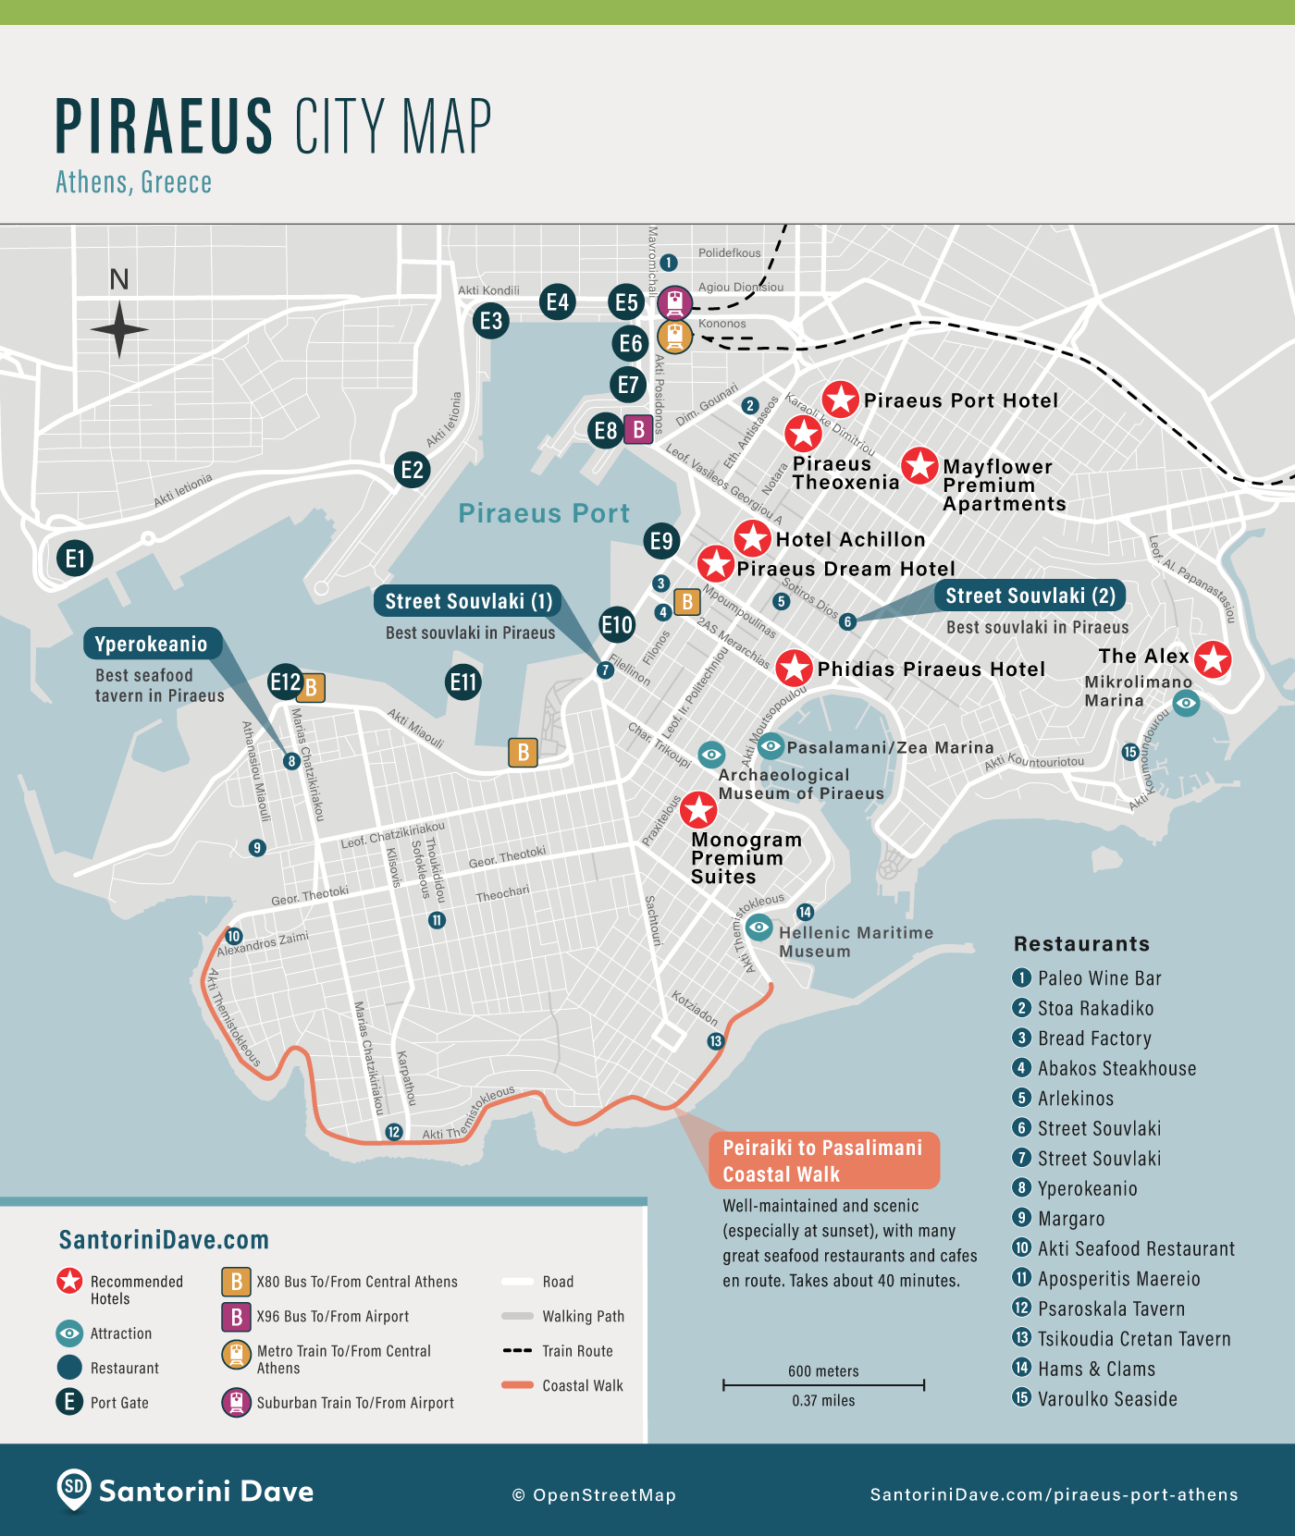 Piraeus Map Of The City 1295x1536 